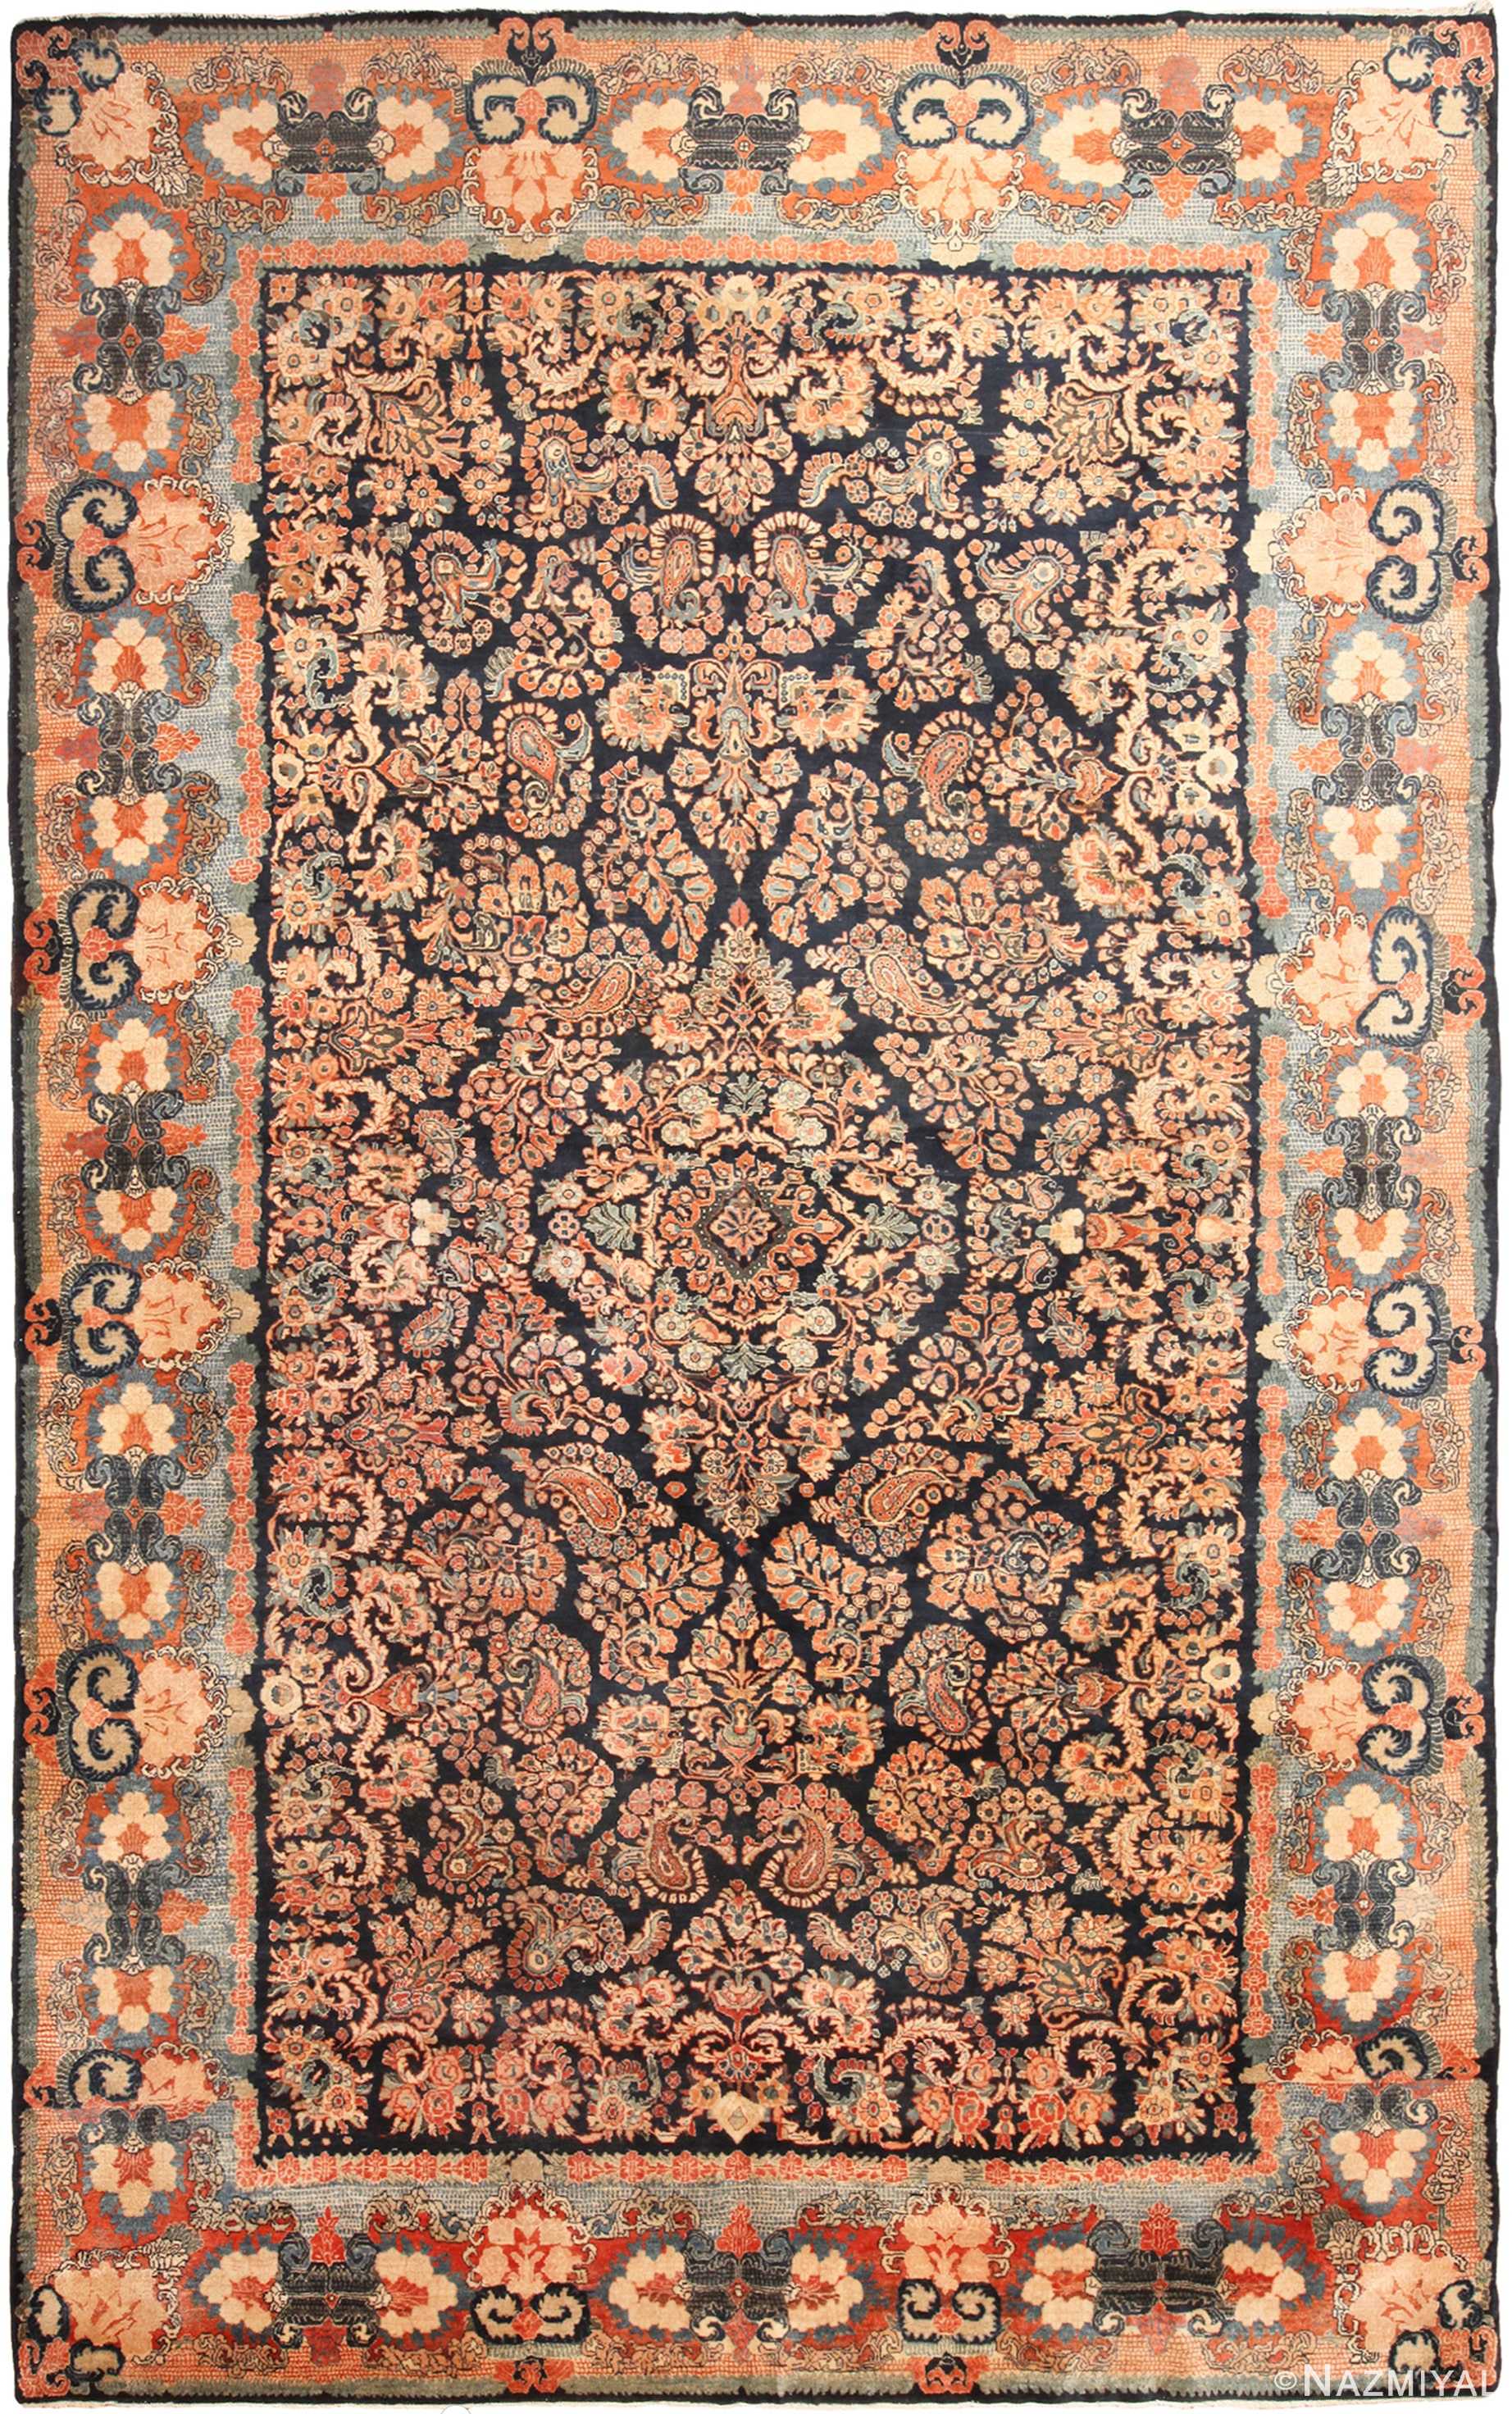 Large Floral Antique Persian Sarouk Rug 70814 by Nazmiyal NYC